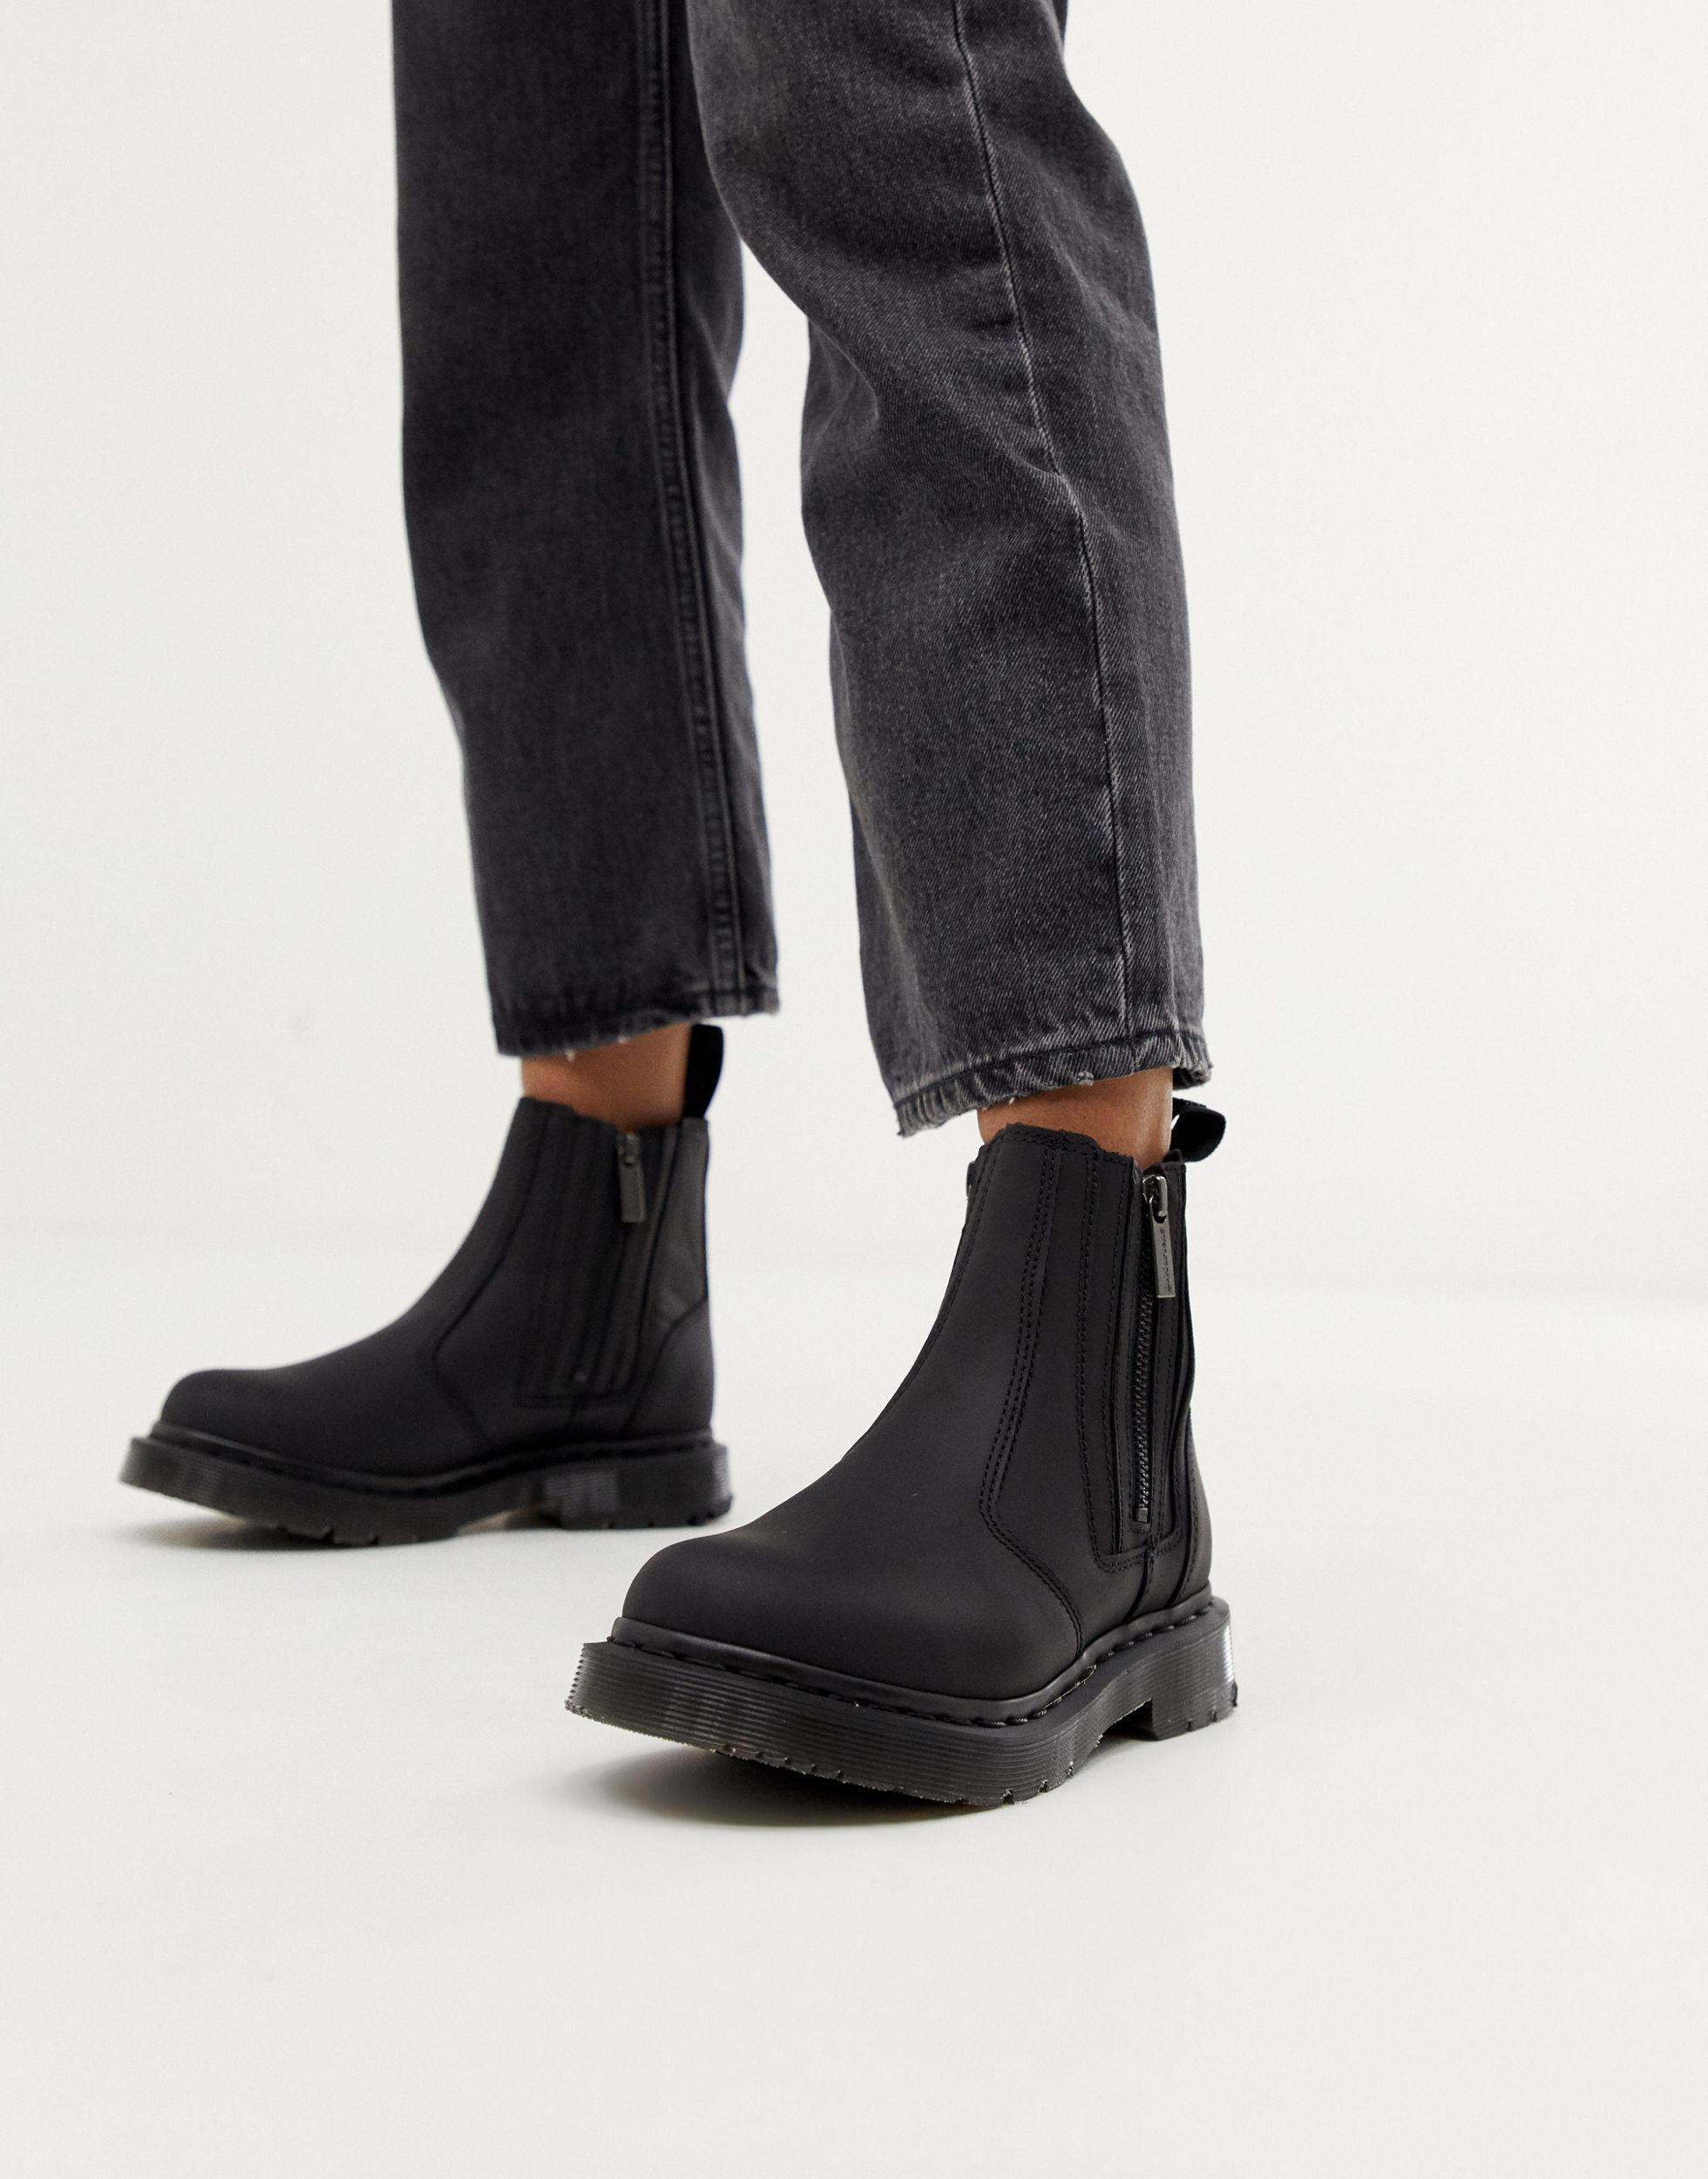 Dr. Martens 2976 Alyson Black Leather Snowgrip Flat Chelsea Boots - Lyst